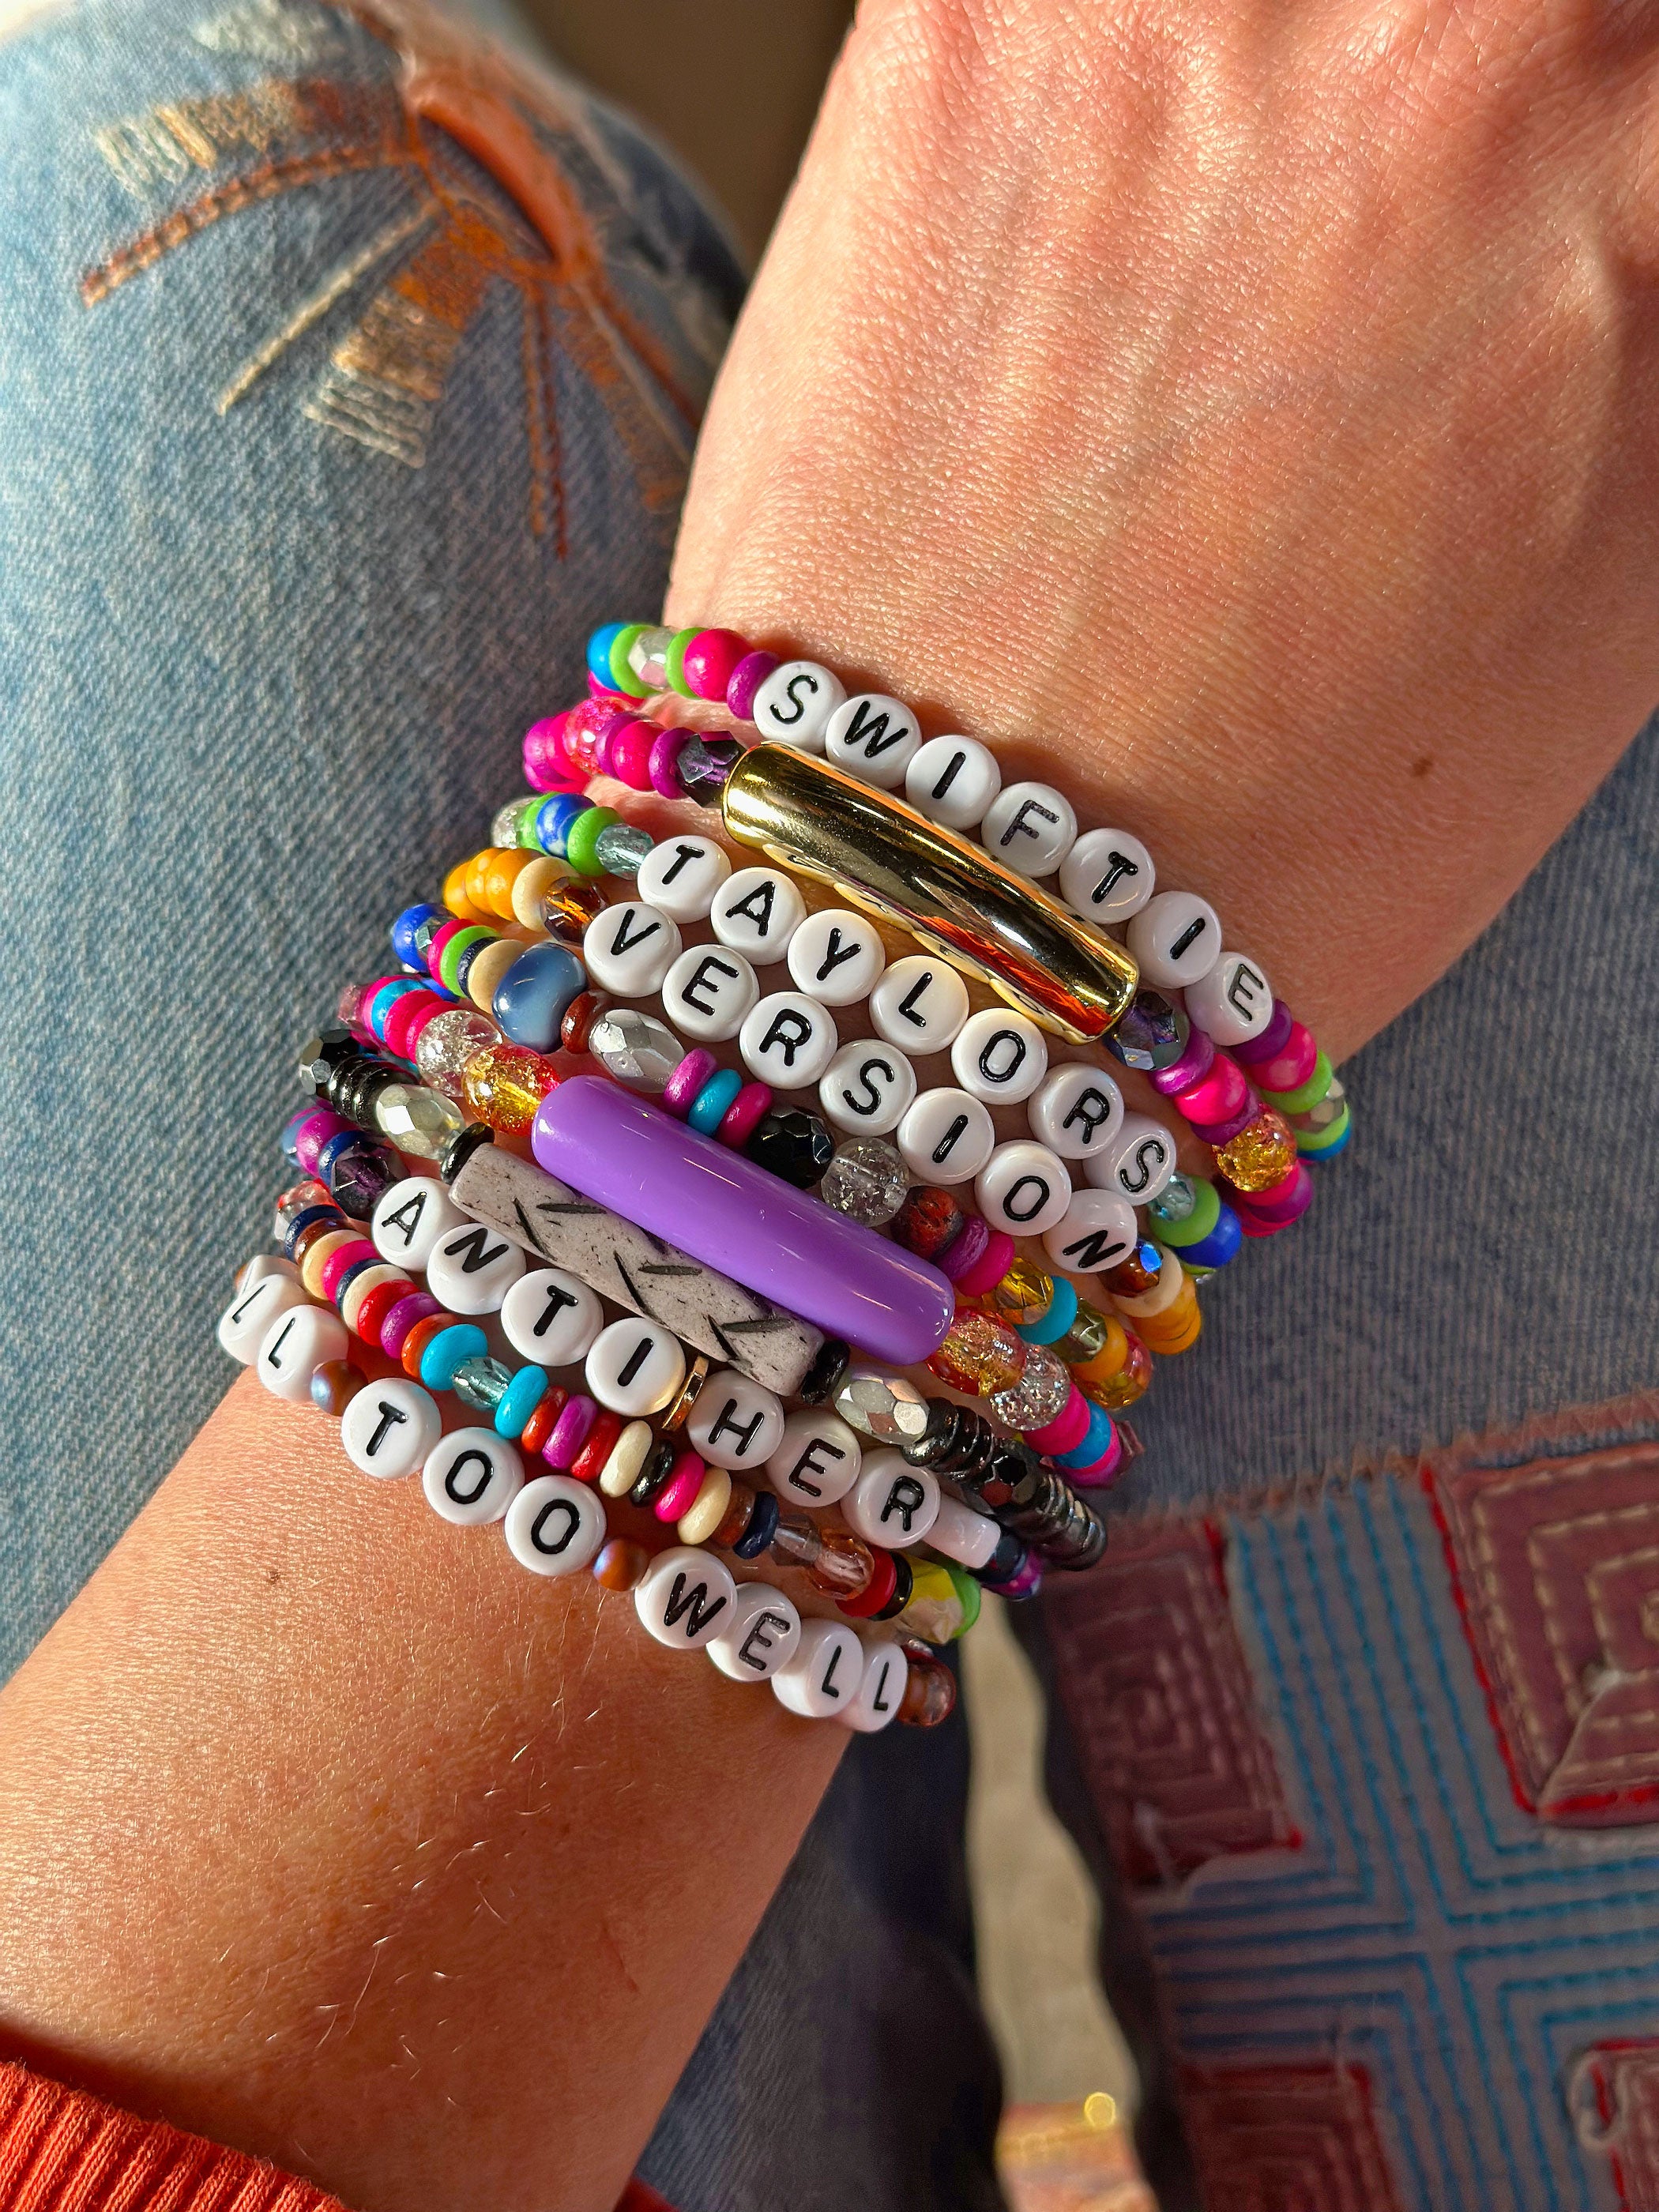 16 DIY Friendship Bracelet Ideas - How to Make Friendship Bracelets